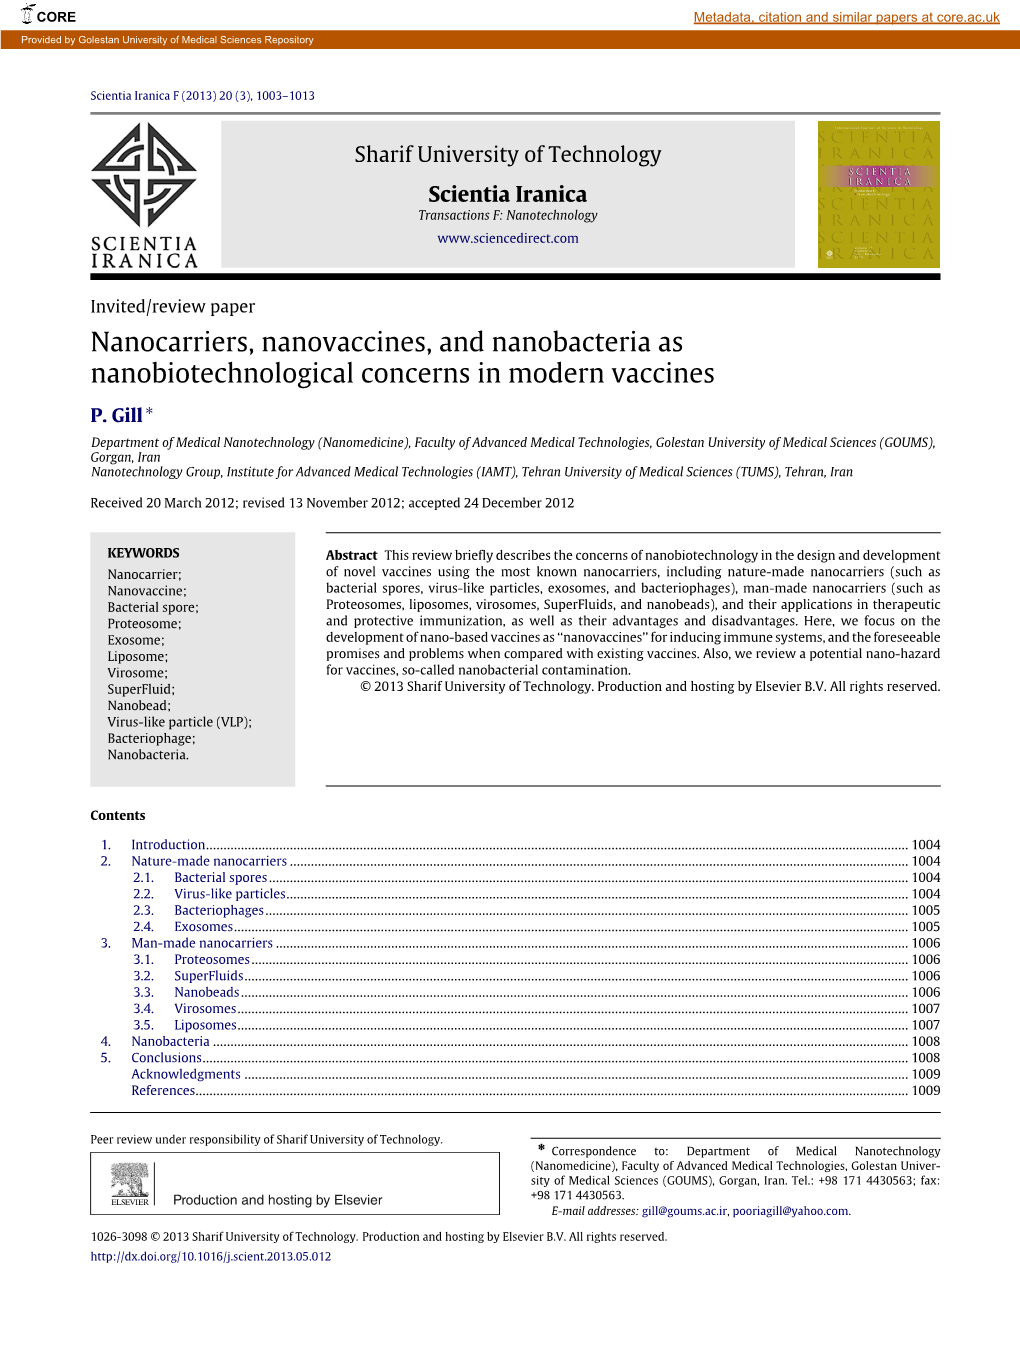 Nanocarriers, Nanovaccines, and Nanobacteria As Nanobiotechnological Concerns in Modern Vaccines